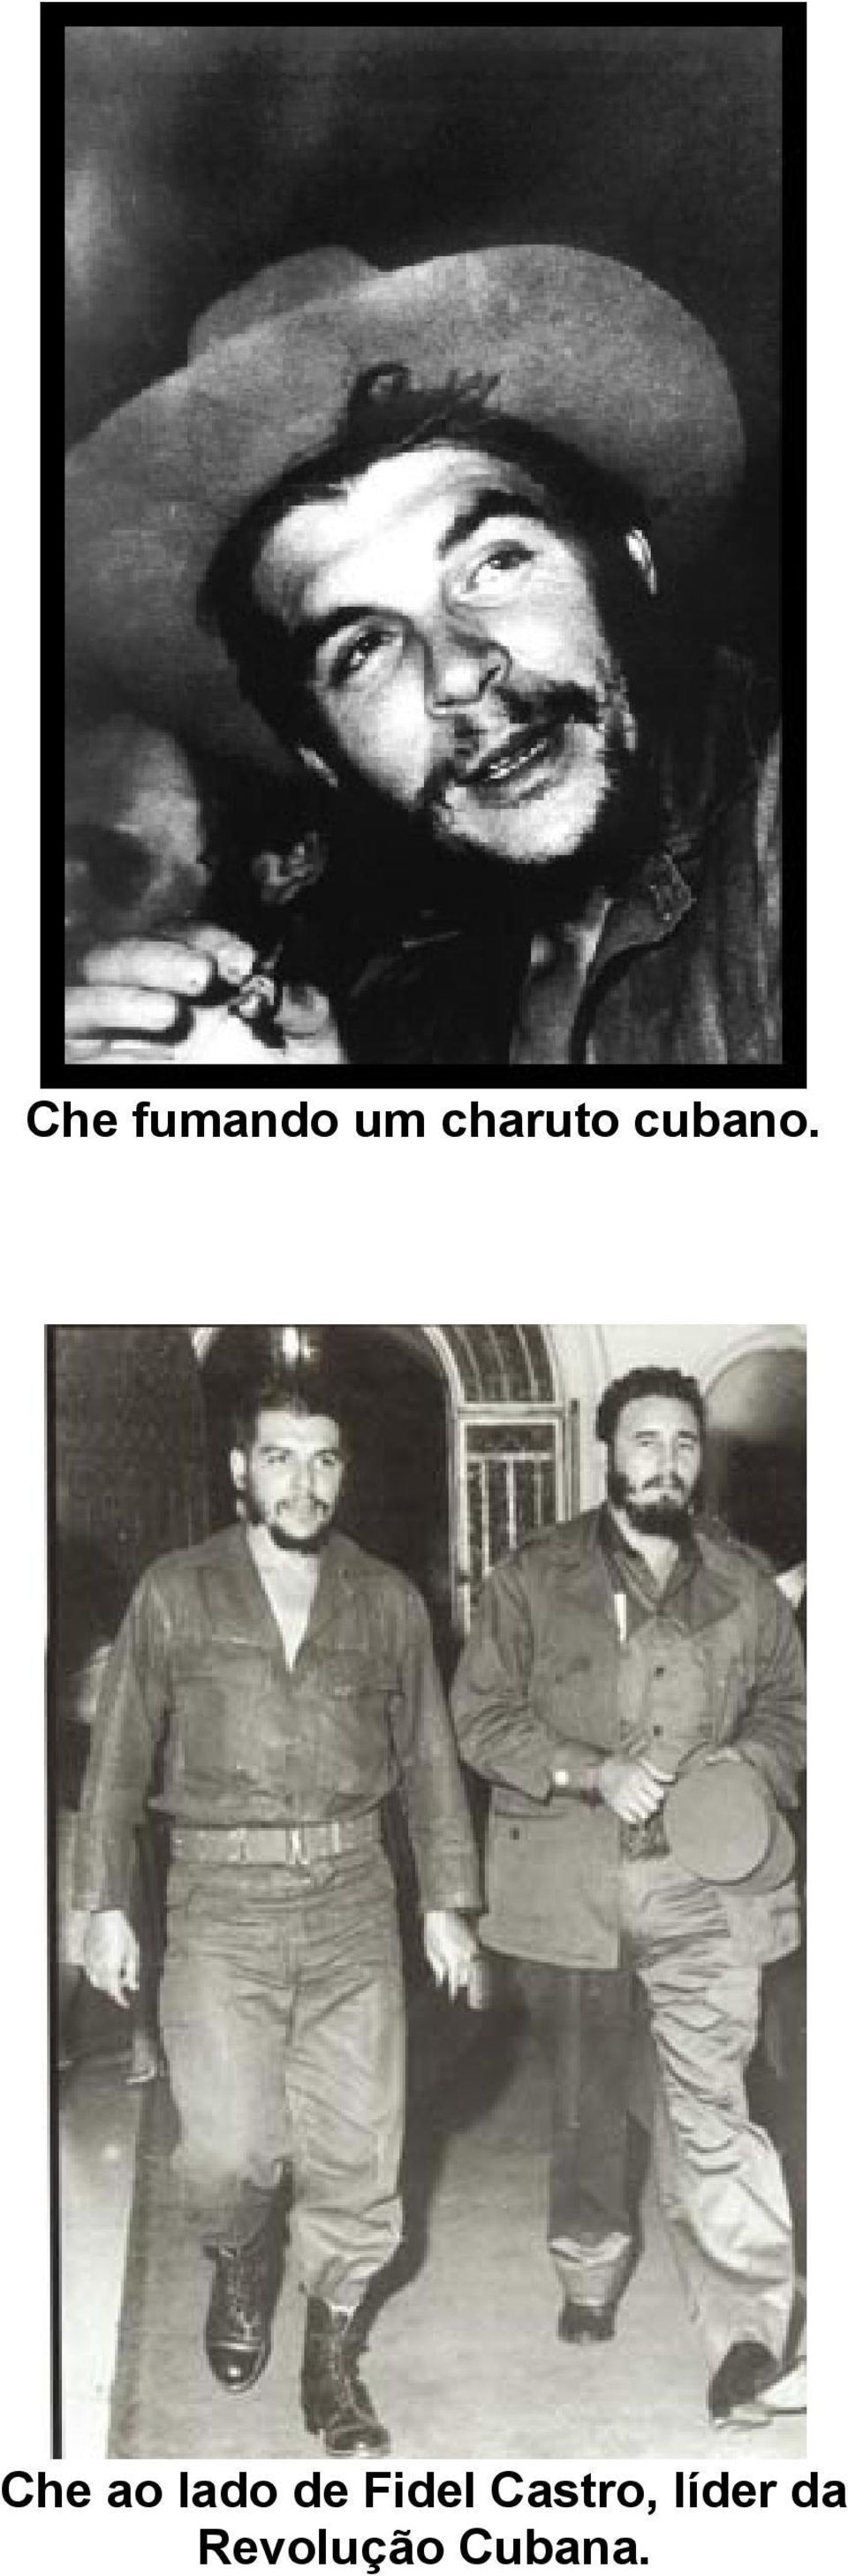 Che ao lado de Fidel